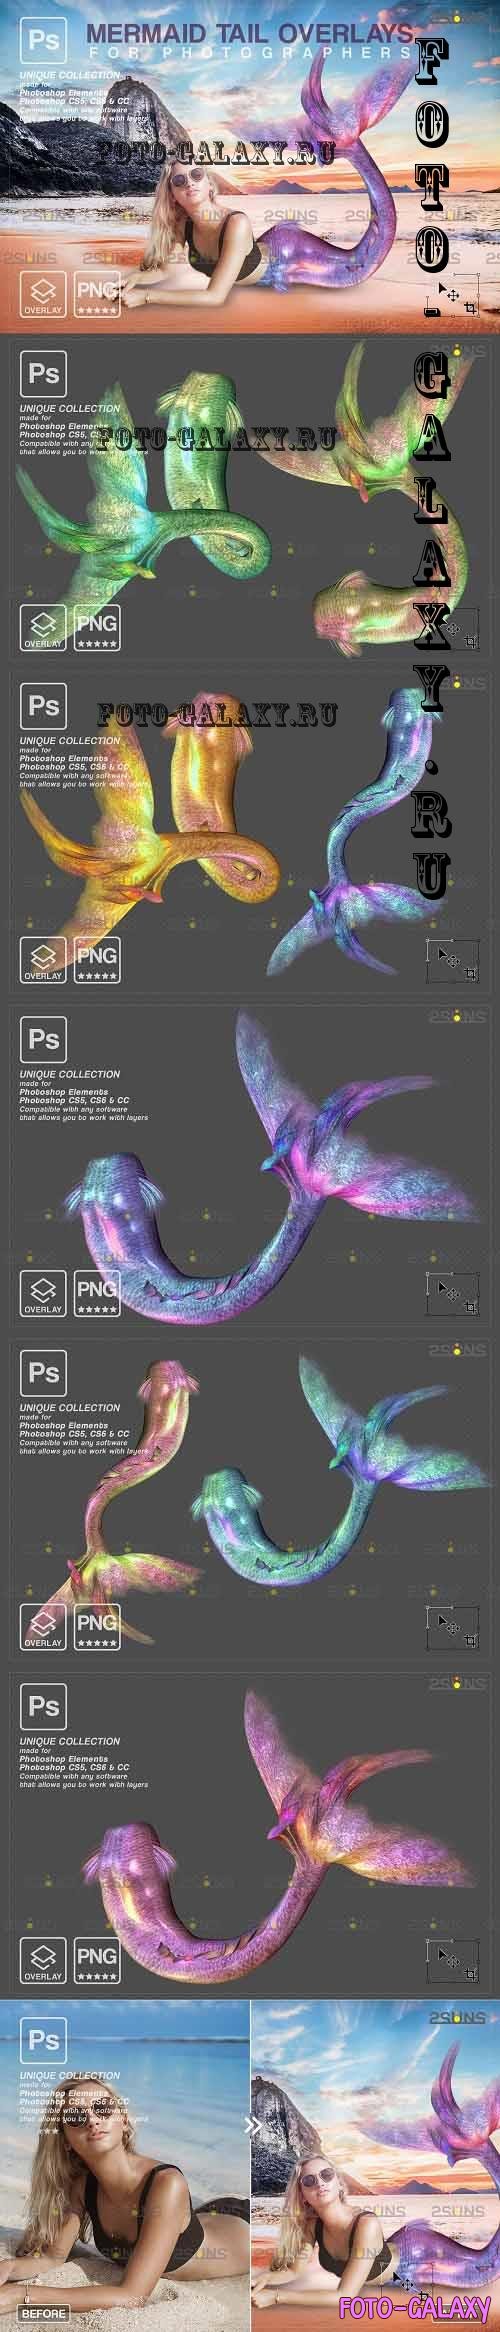 Mermaid tail photoshop overlay V3 - 7259686